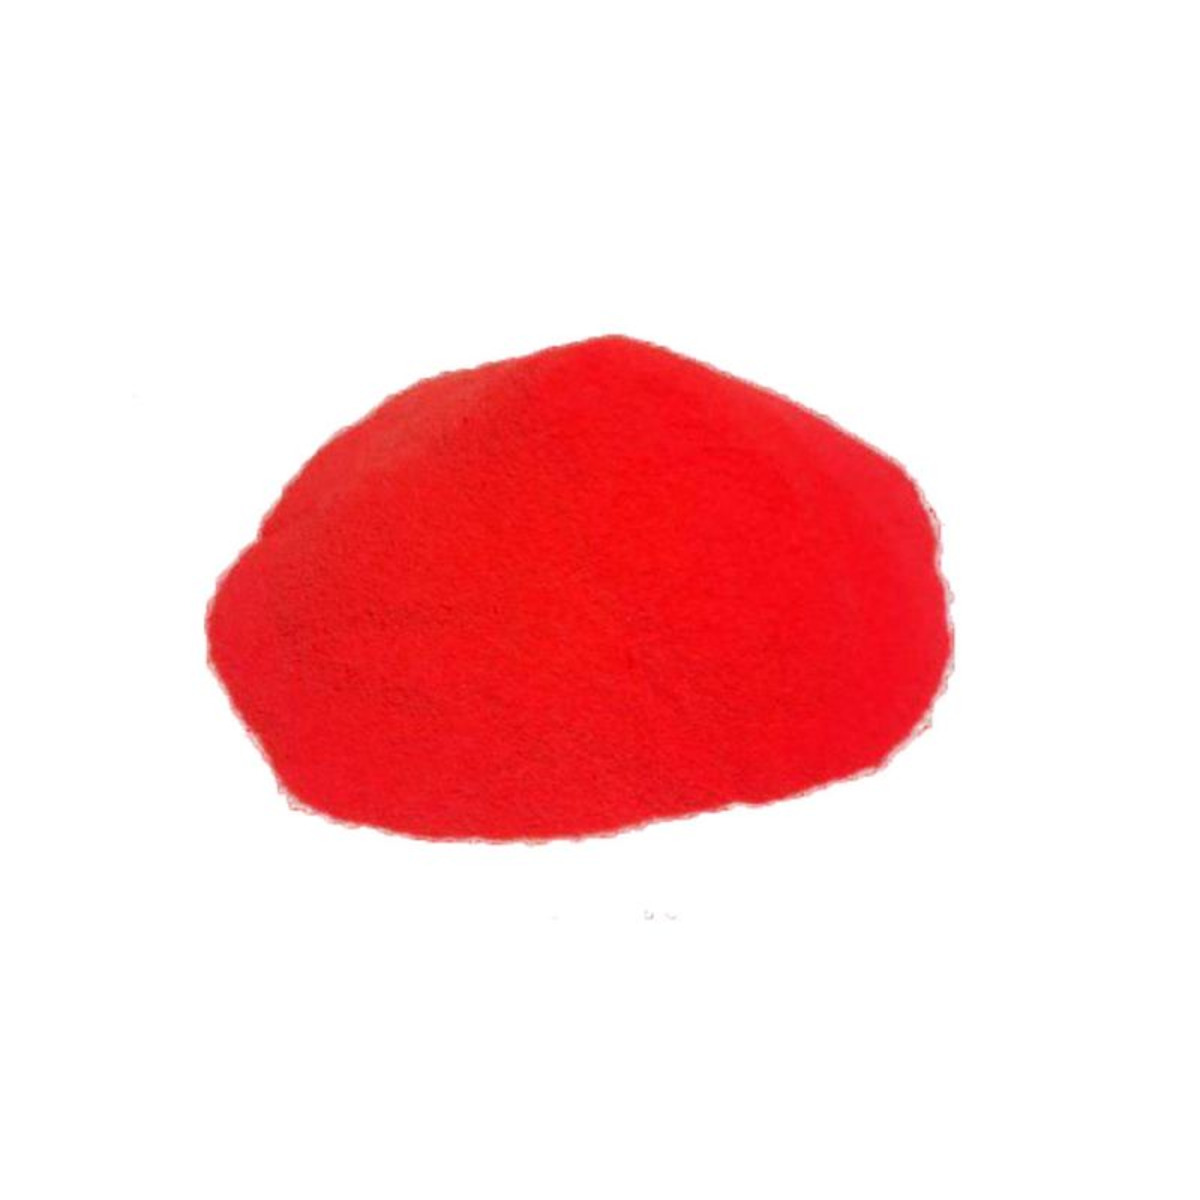 M2 Fishing Plastgum Polvere Plastificante per Zavorre -  Rossa Fosforescente - 100 g        